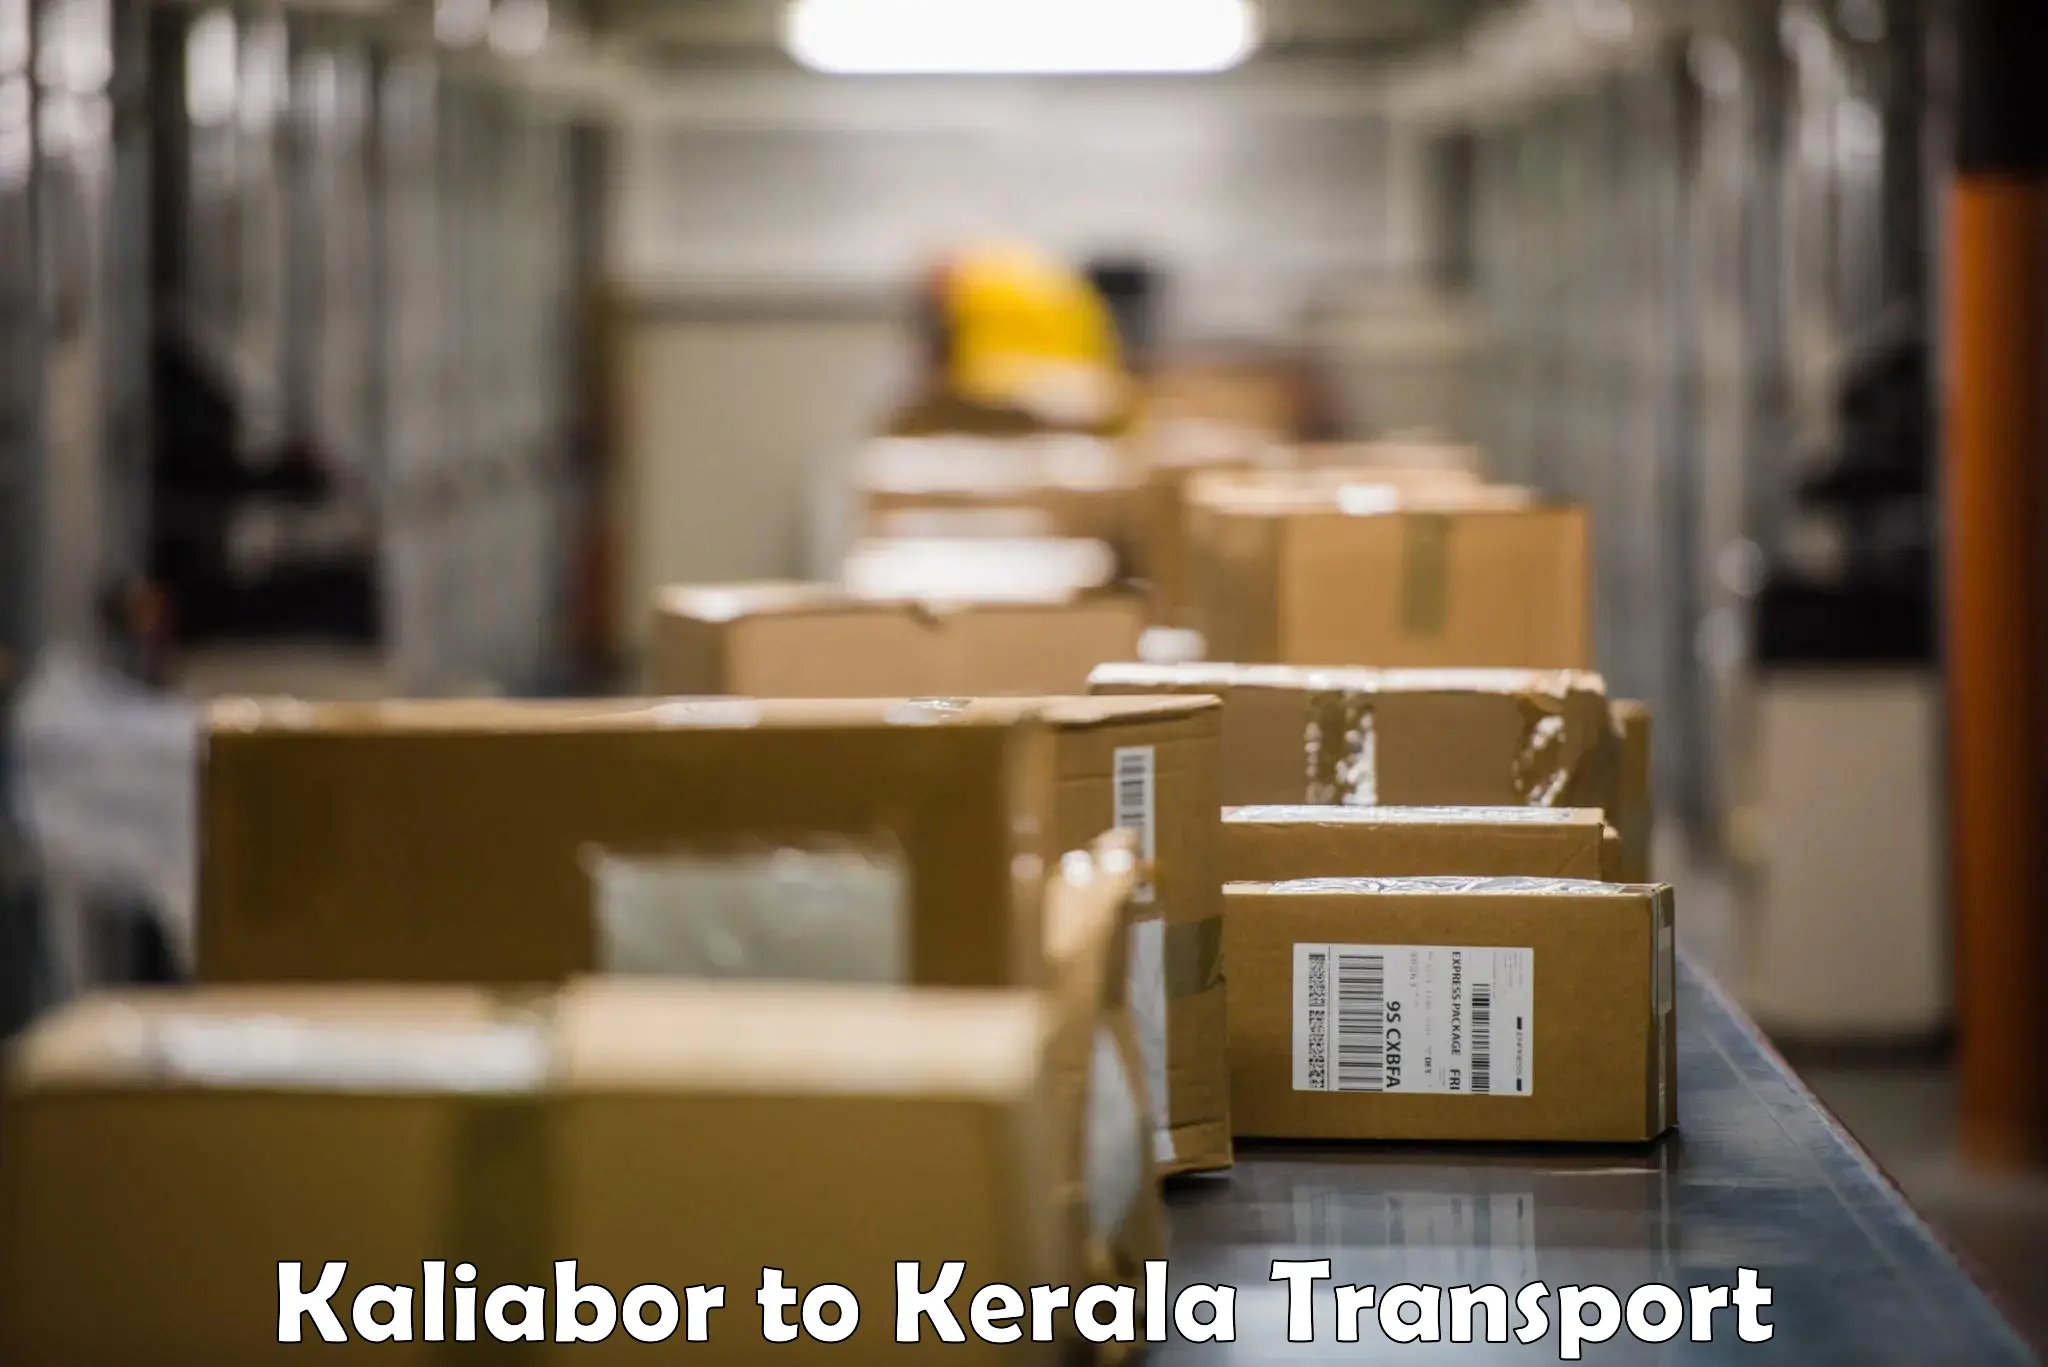 Online transport service Kaliabor to Kochi